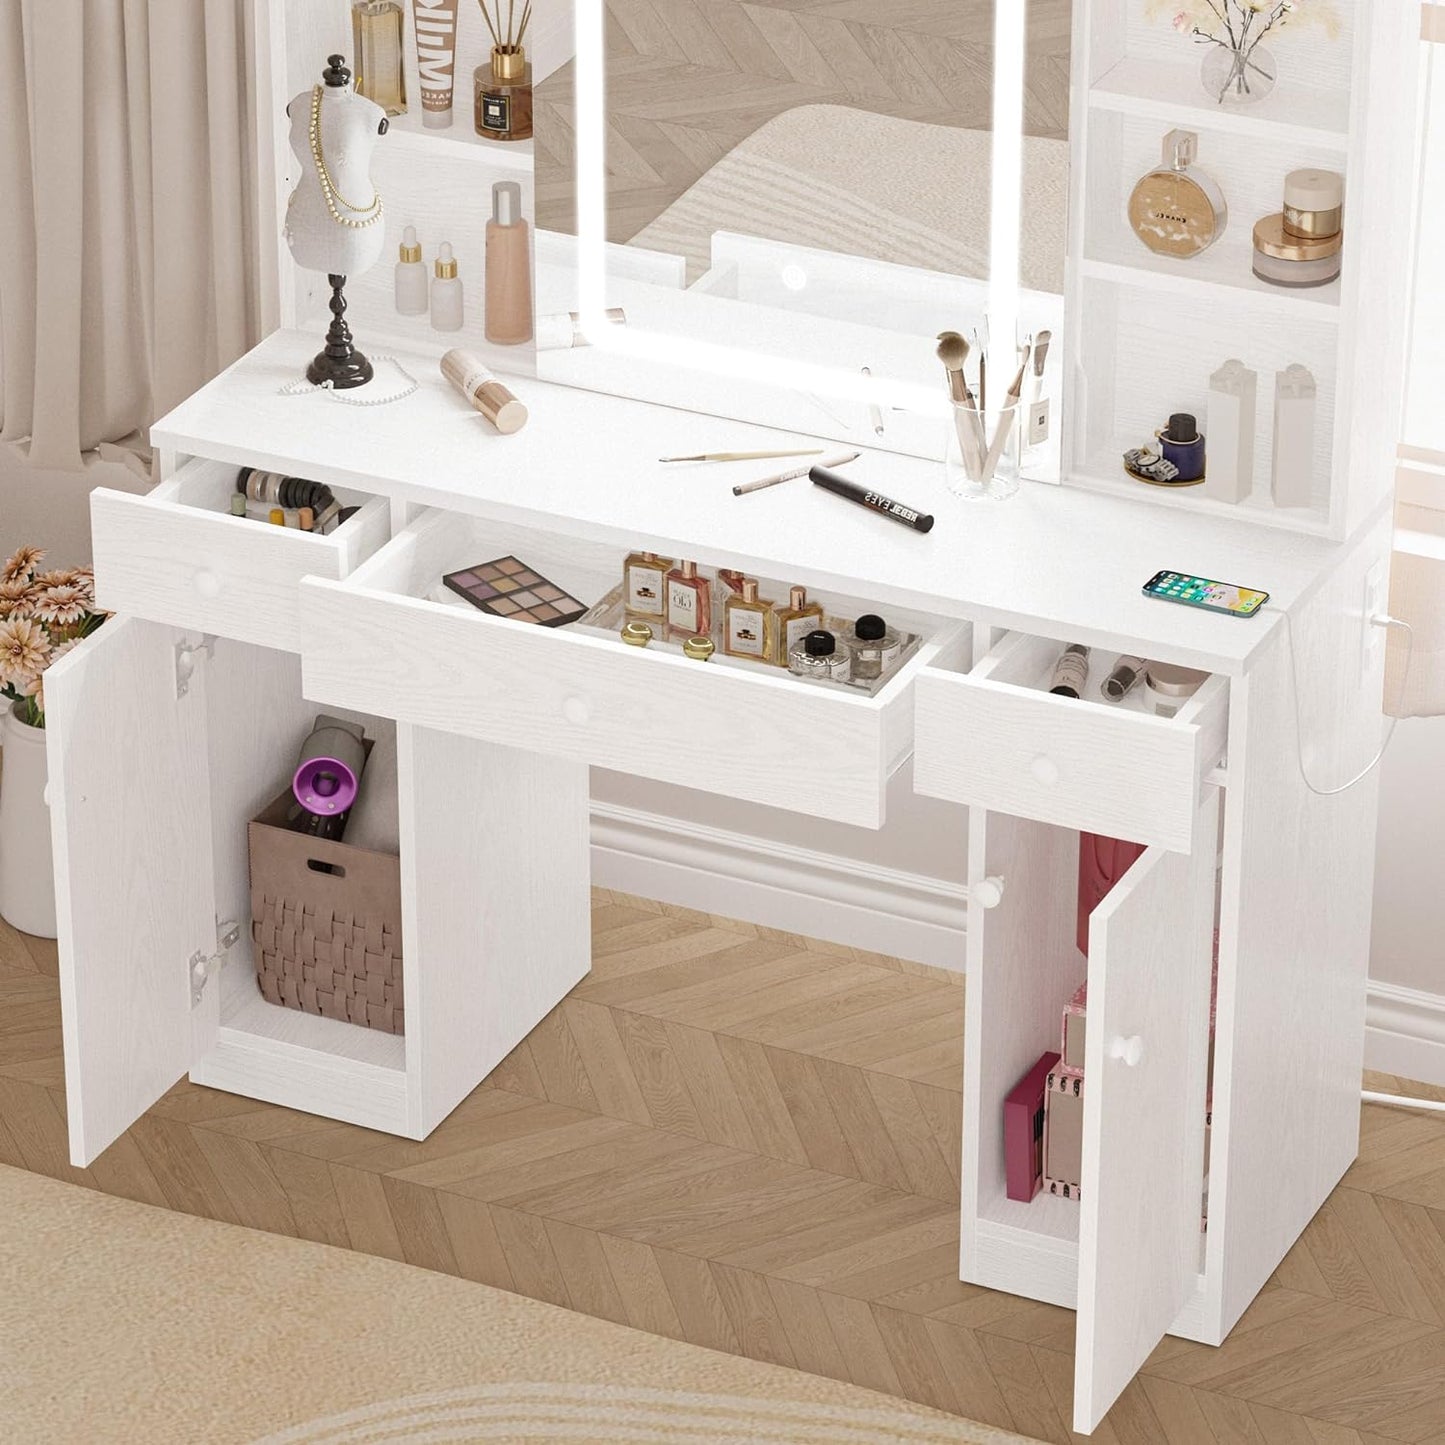 【HOT】7 Drawers Vanity Desk Set